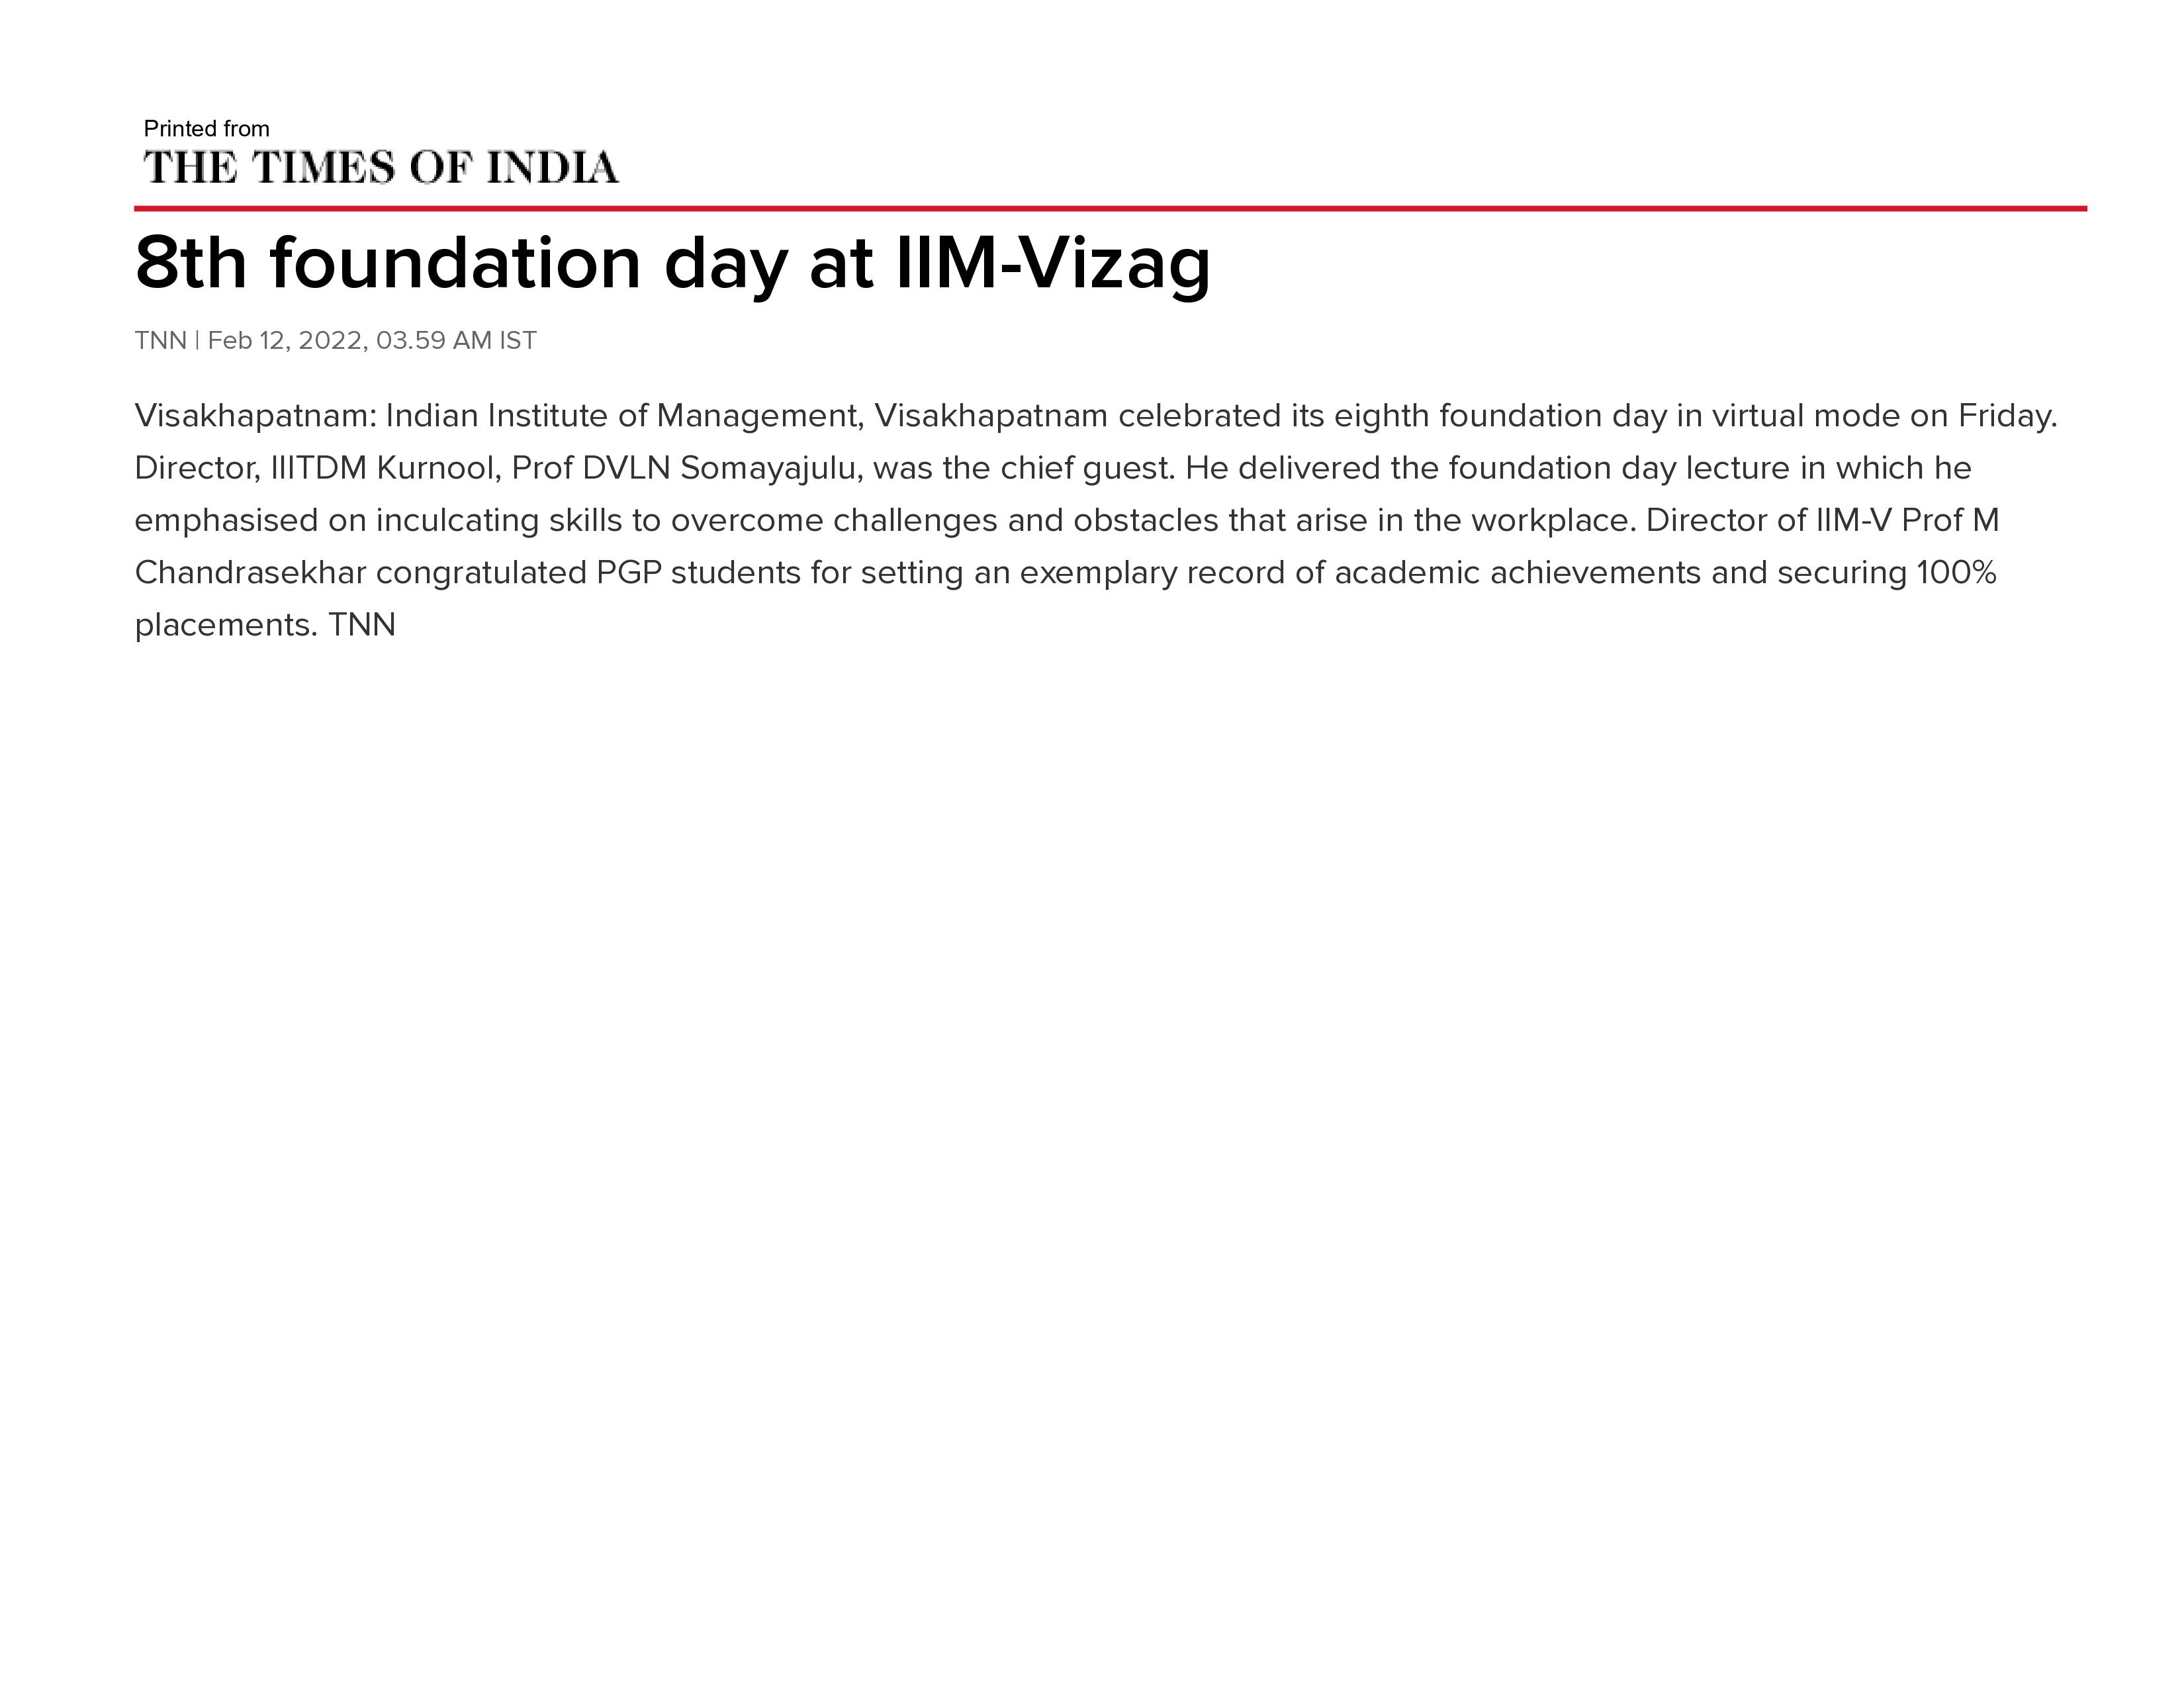 IIMV Celebrates 8th Foundation Day - 11.02.2022